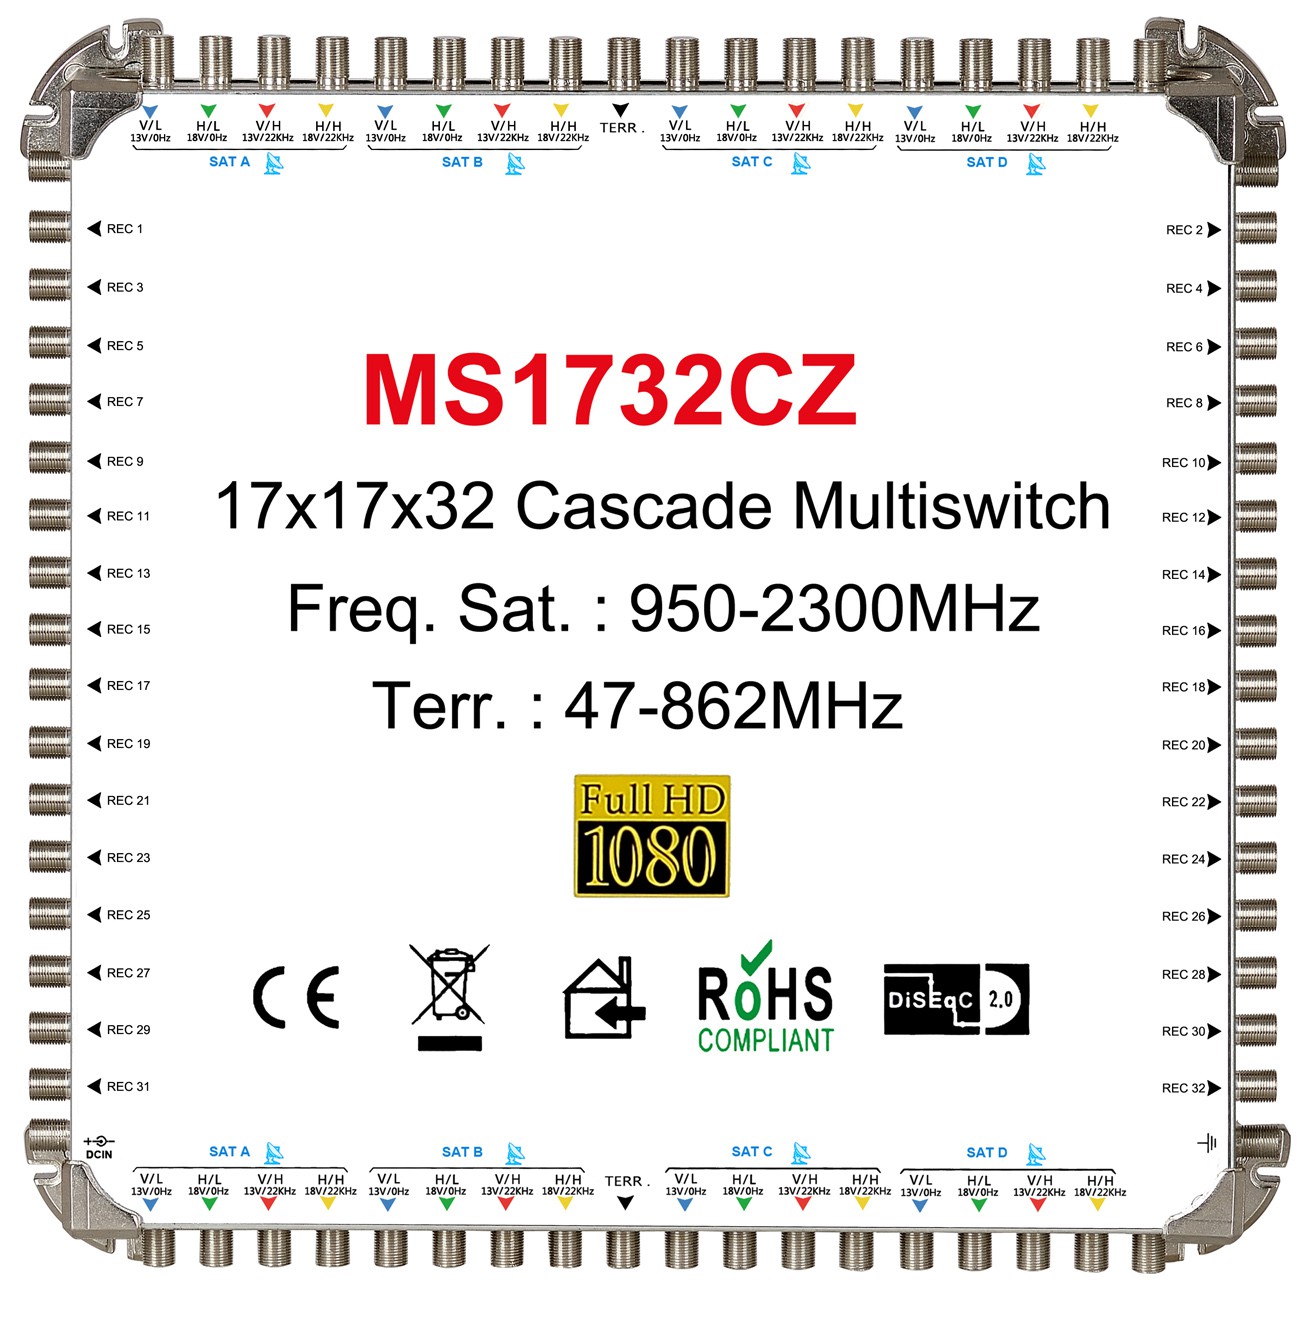 17x32 satellite multi-switch, Cascade multiswitch